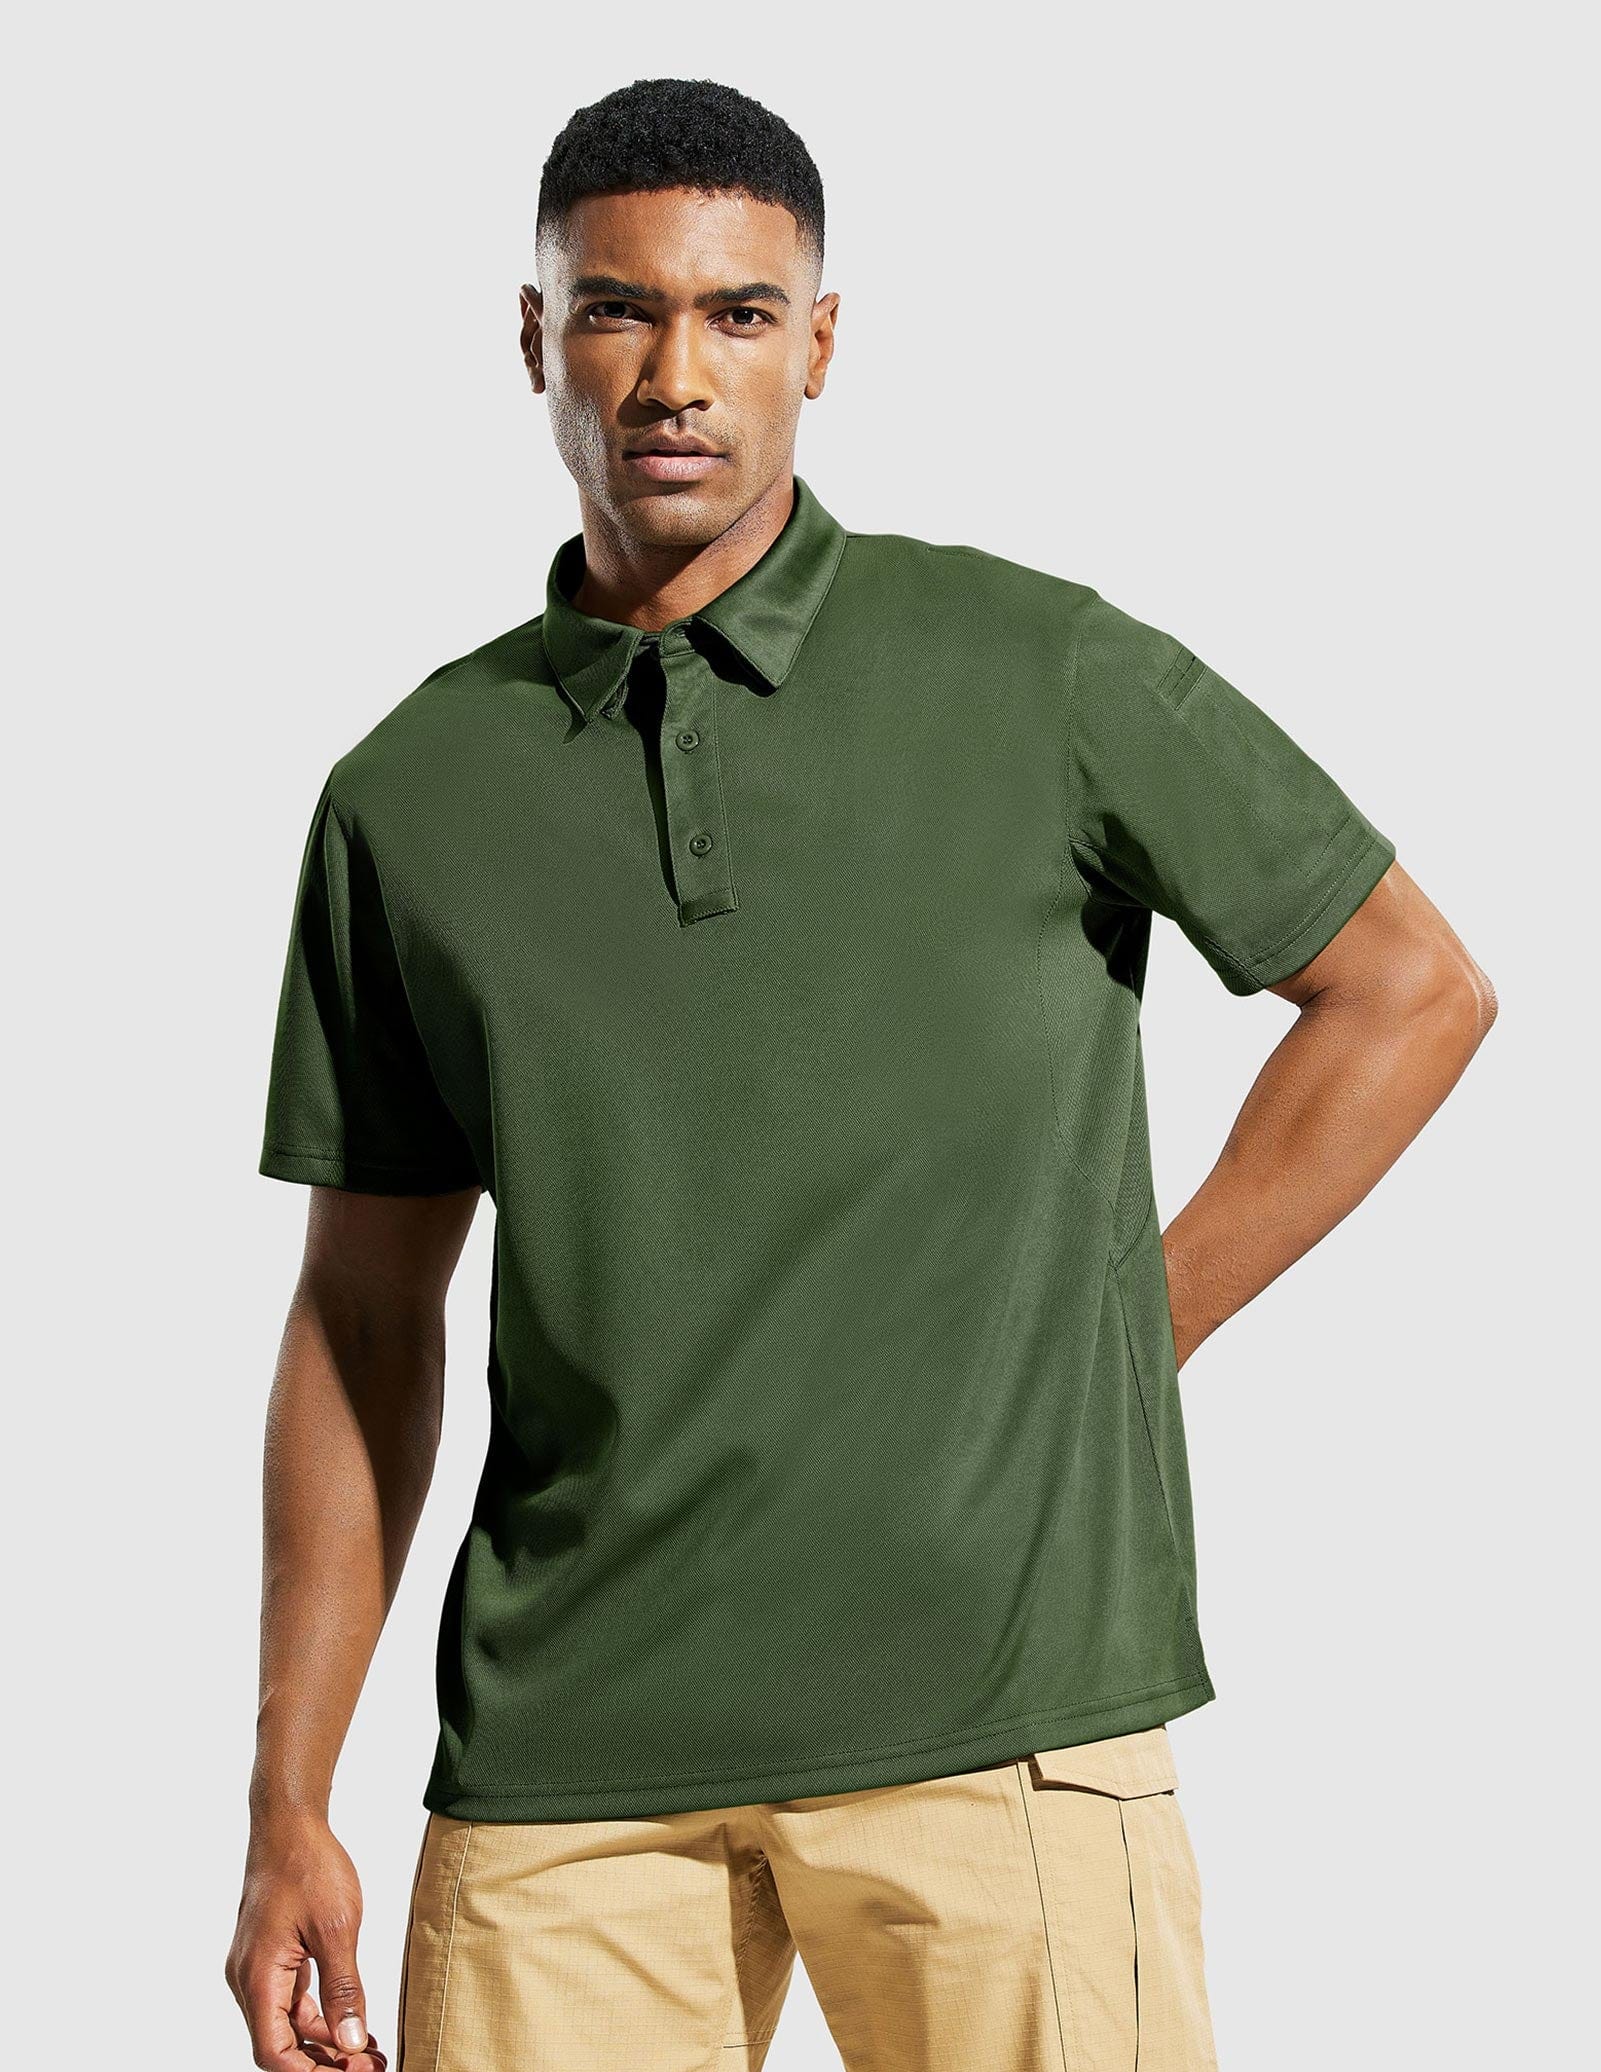 MIER Men's Tactical Polo Shirts Outdoor Collared Shirt